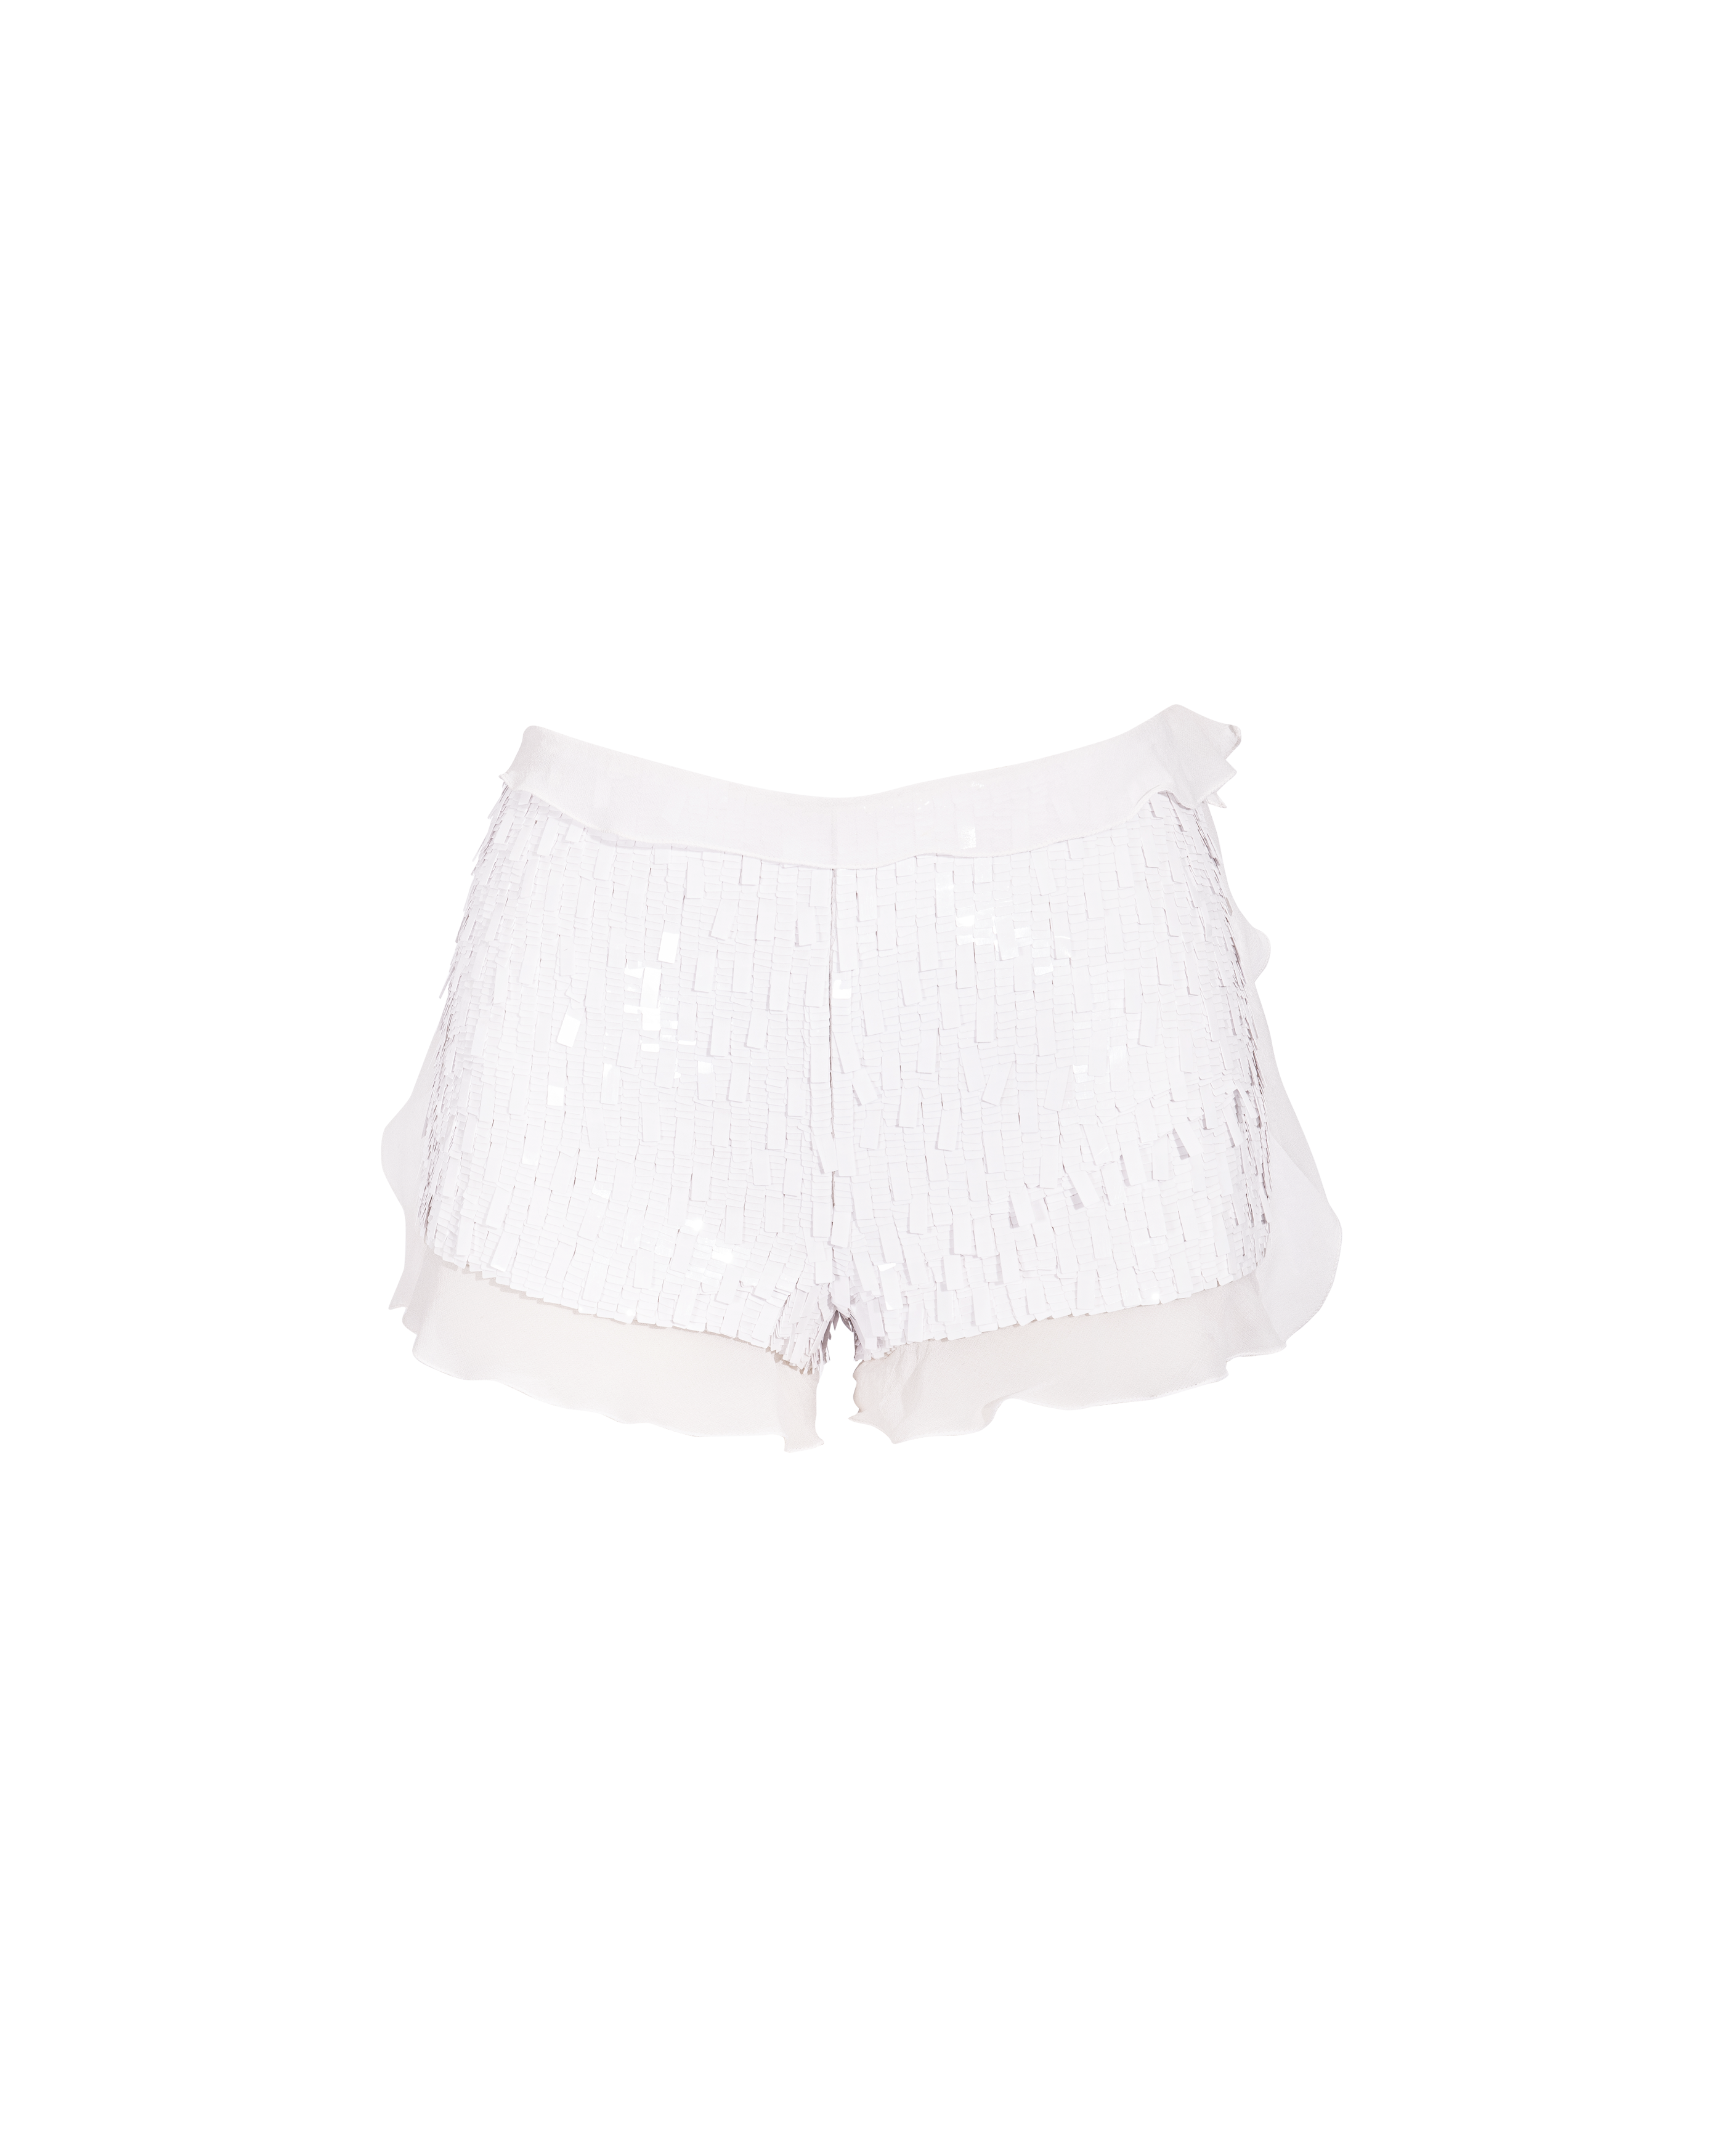 S/S 2000 White Embellished Hot Pants